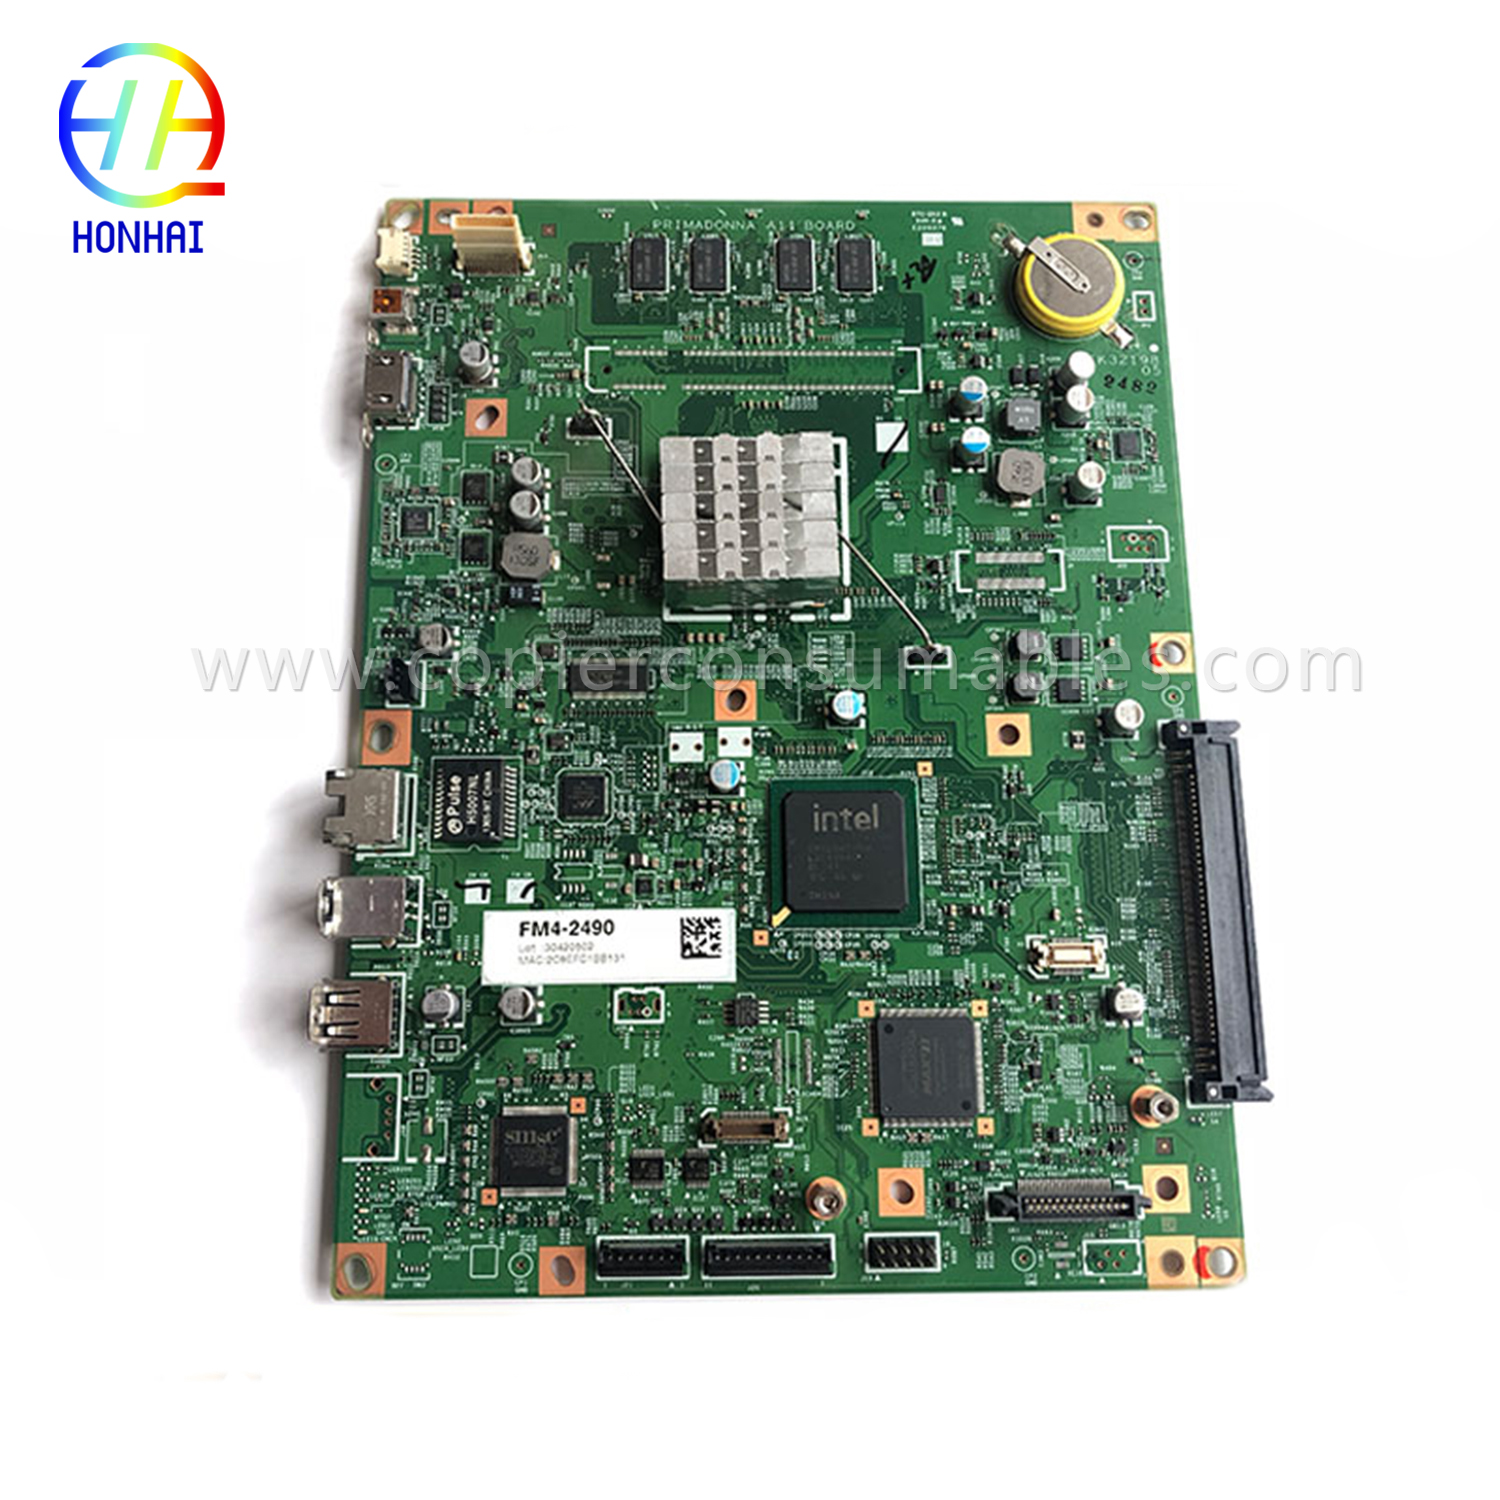 Main Controller PCB Board for Canon IR Adv 6255 6265 6275 FM4-2490-000 OEM